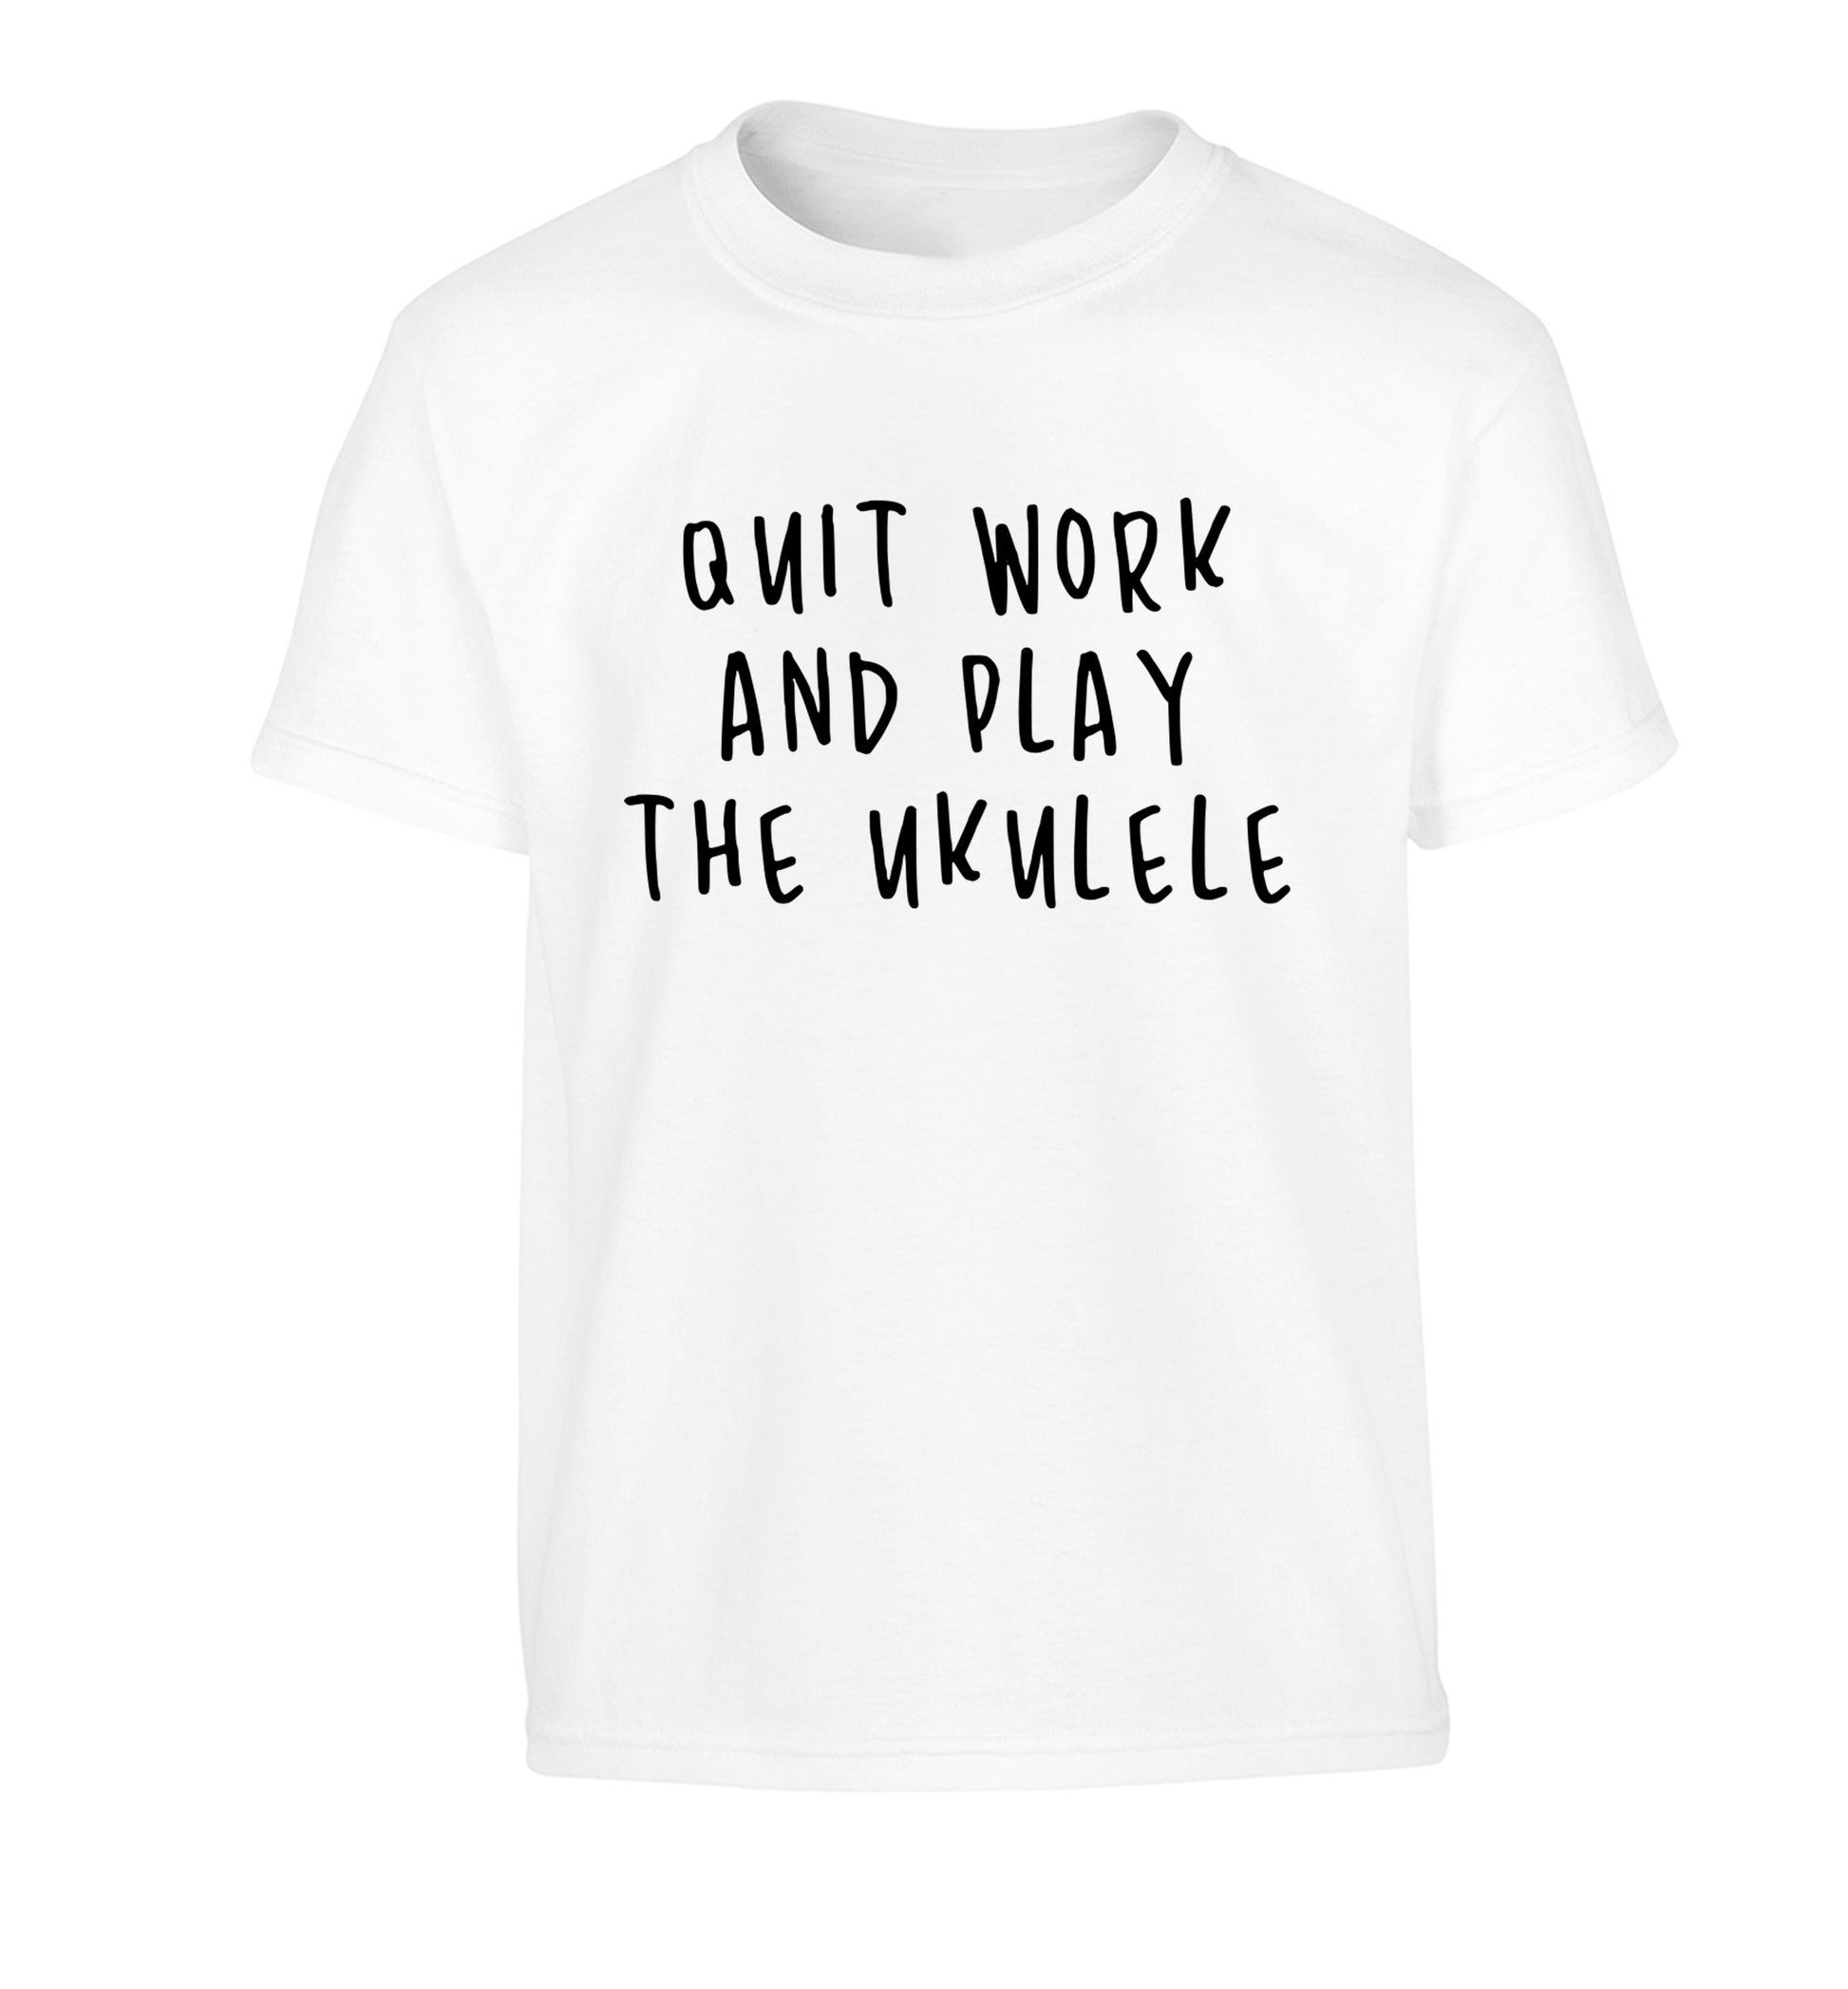 Quit work and play the ukulele Children's white Tshirt 12-14 Years